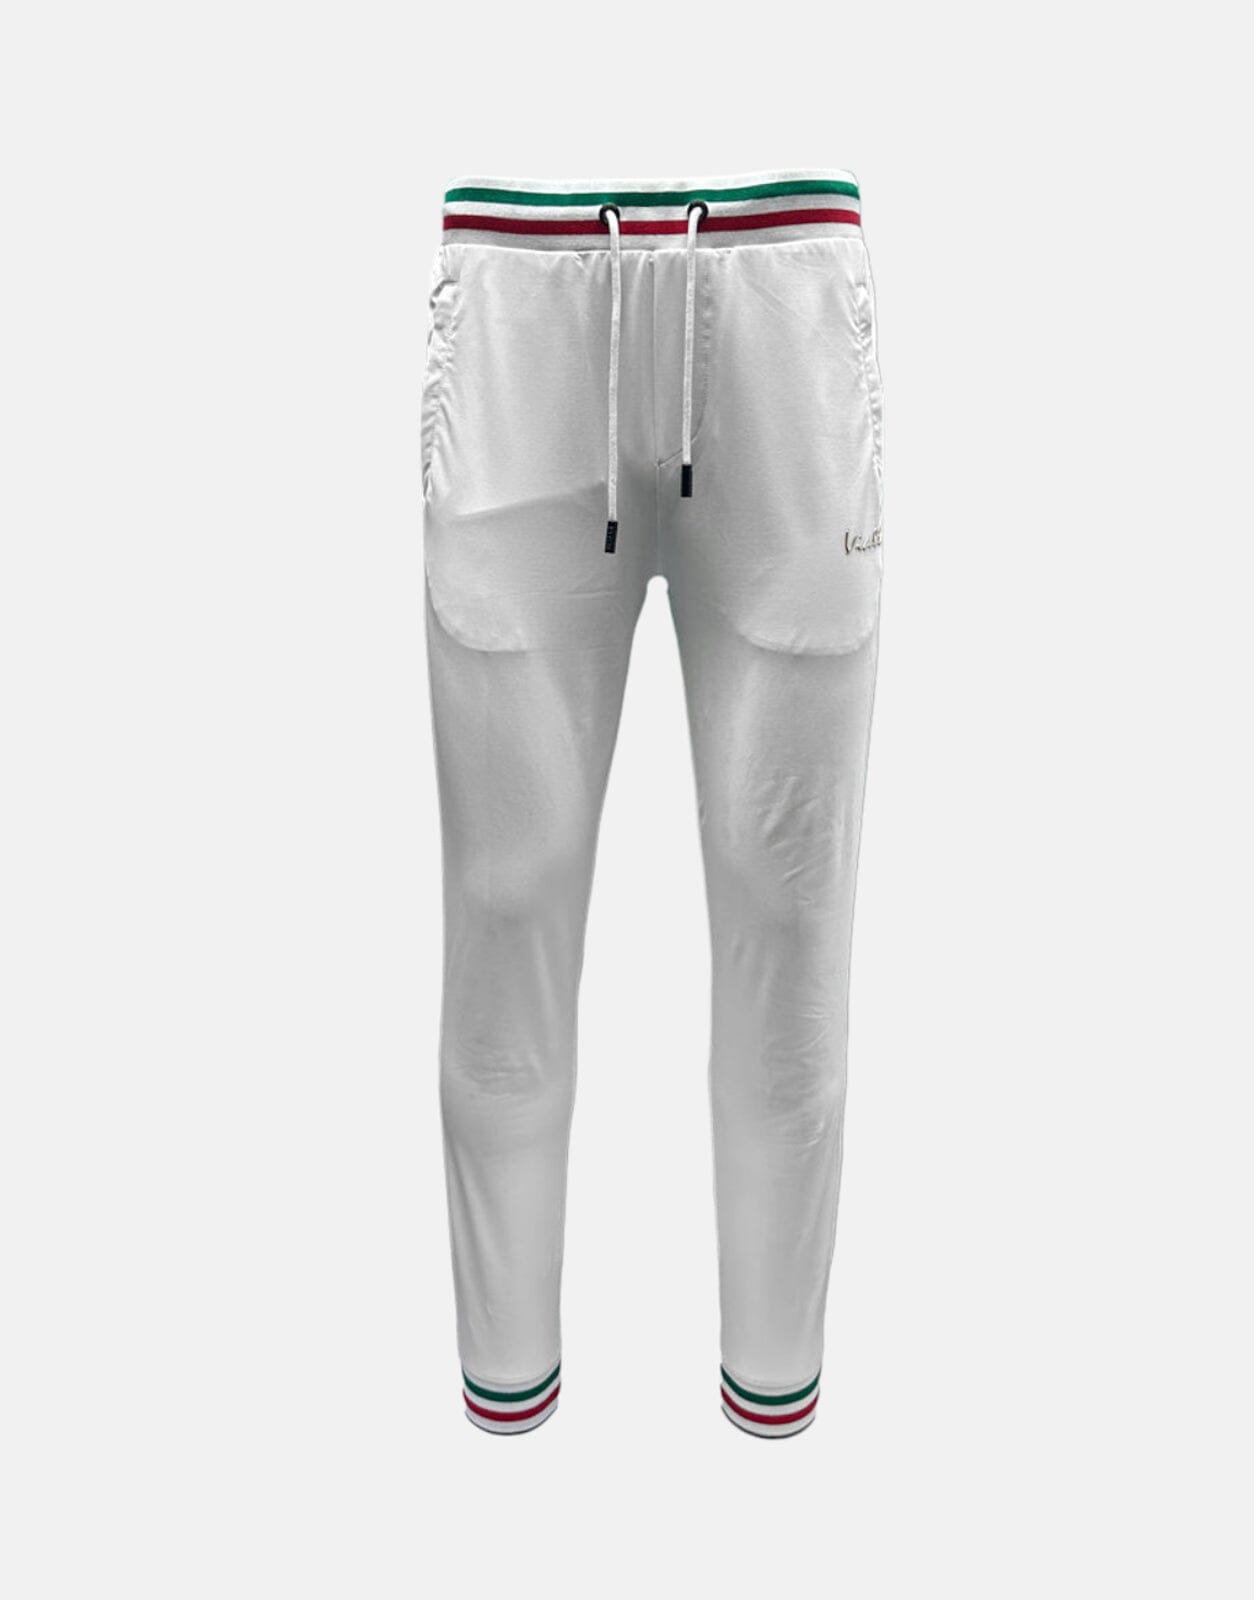 Vialli Ezonkb White Sweatpants - Subwear